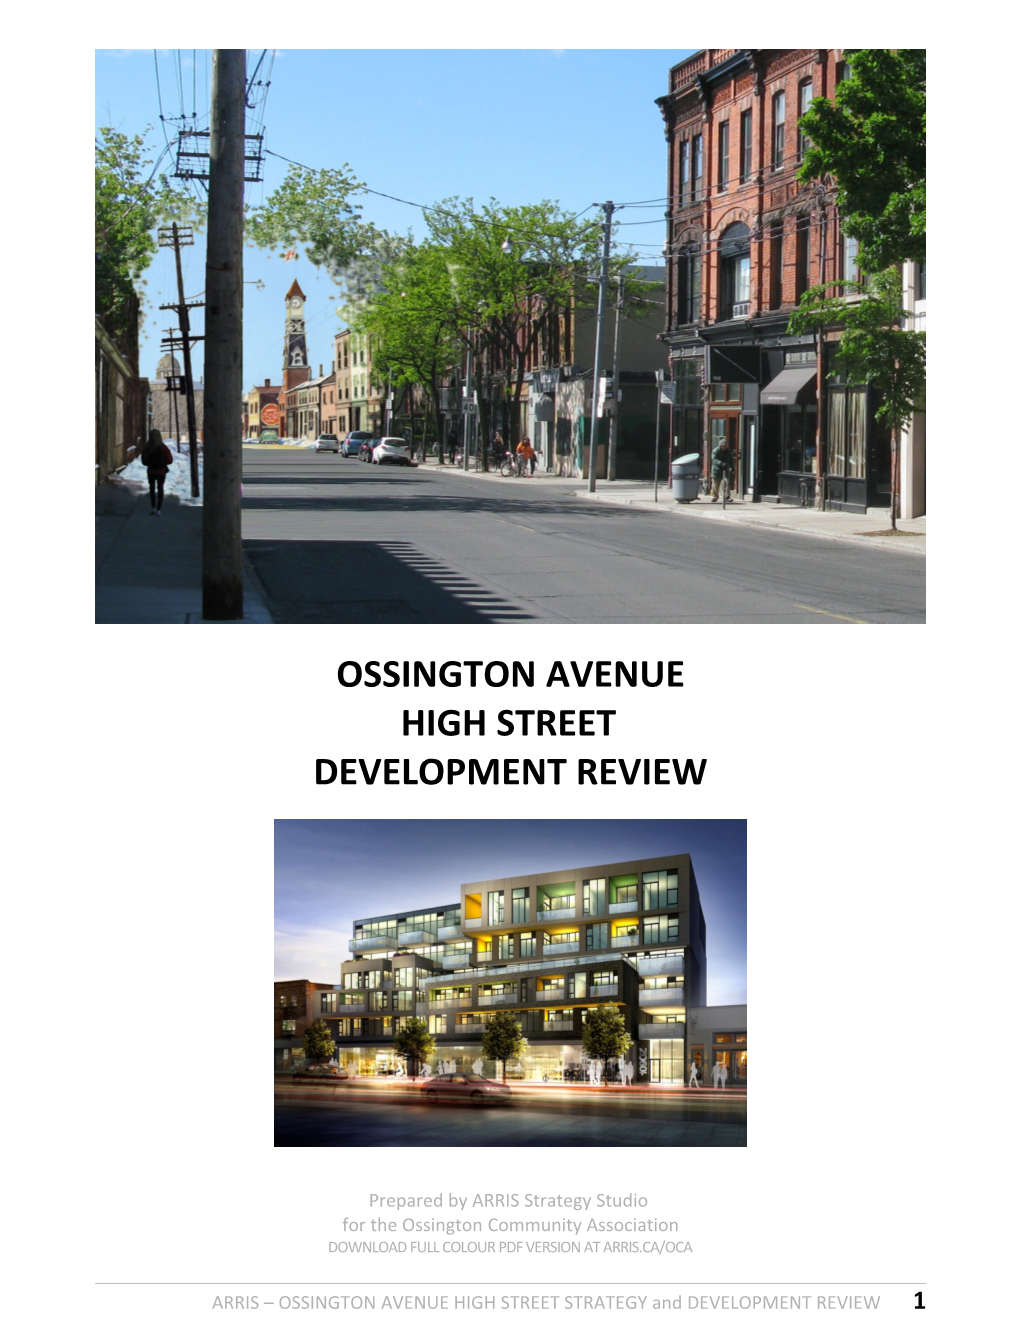 Ossington Avenue High Street Development Review